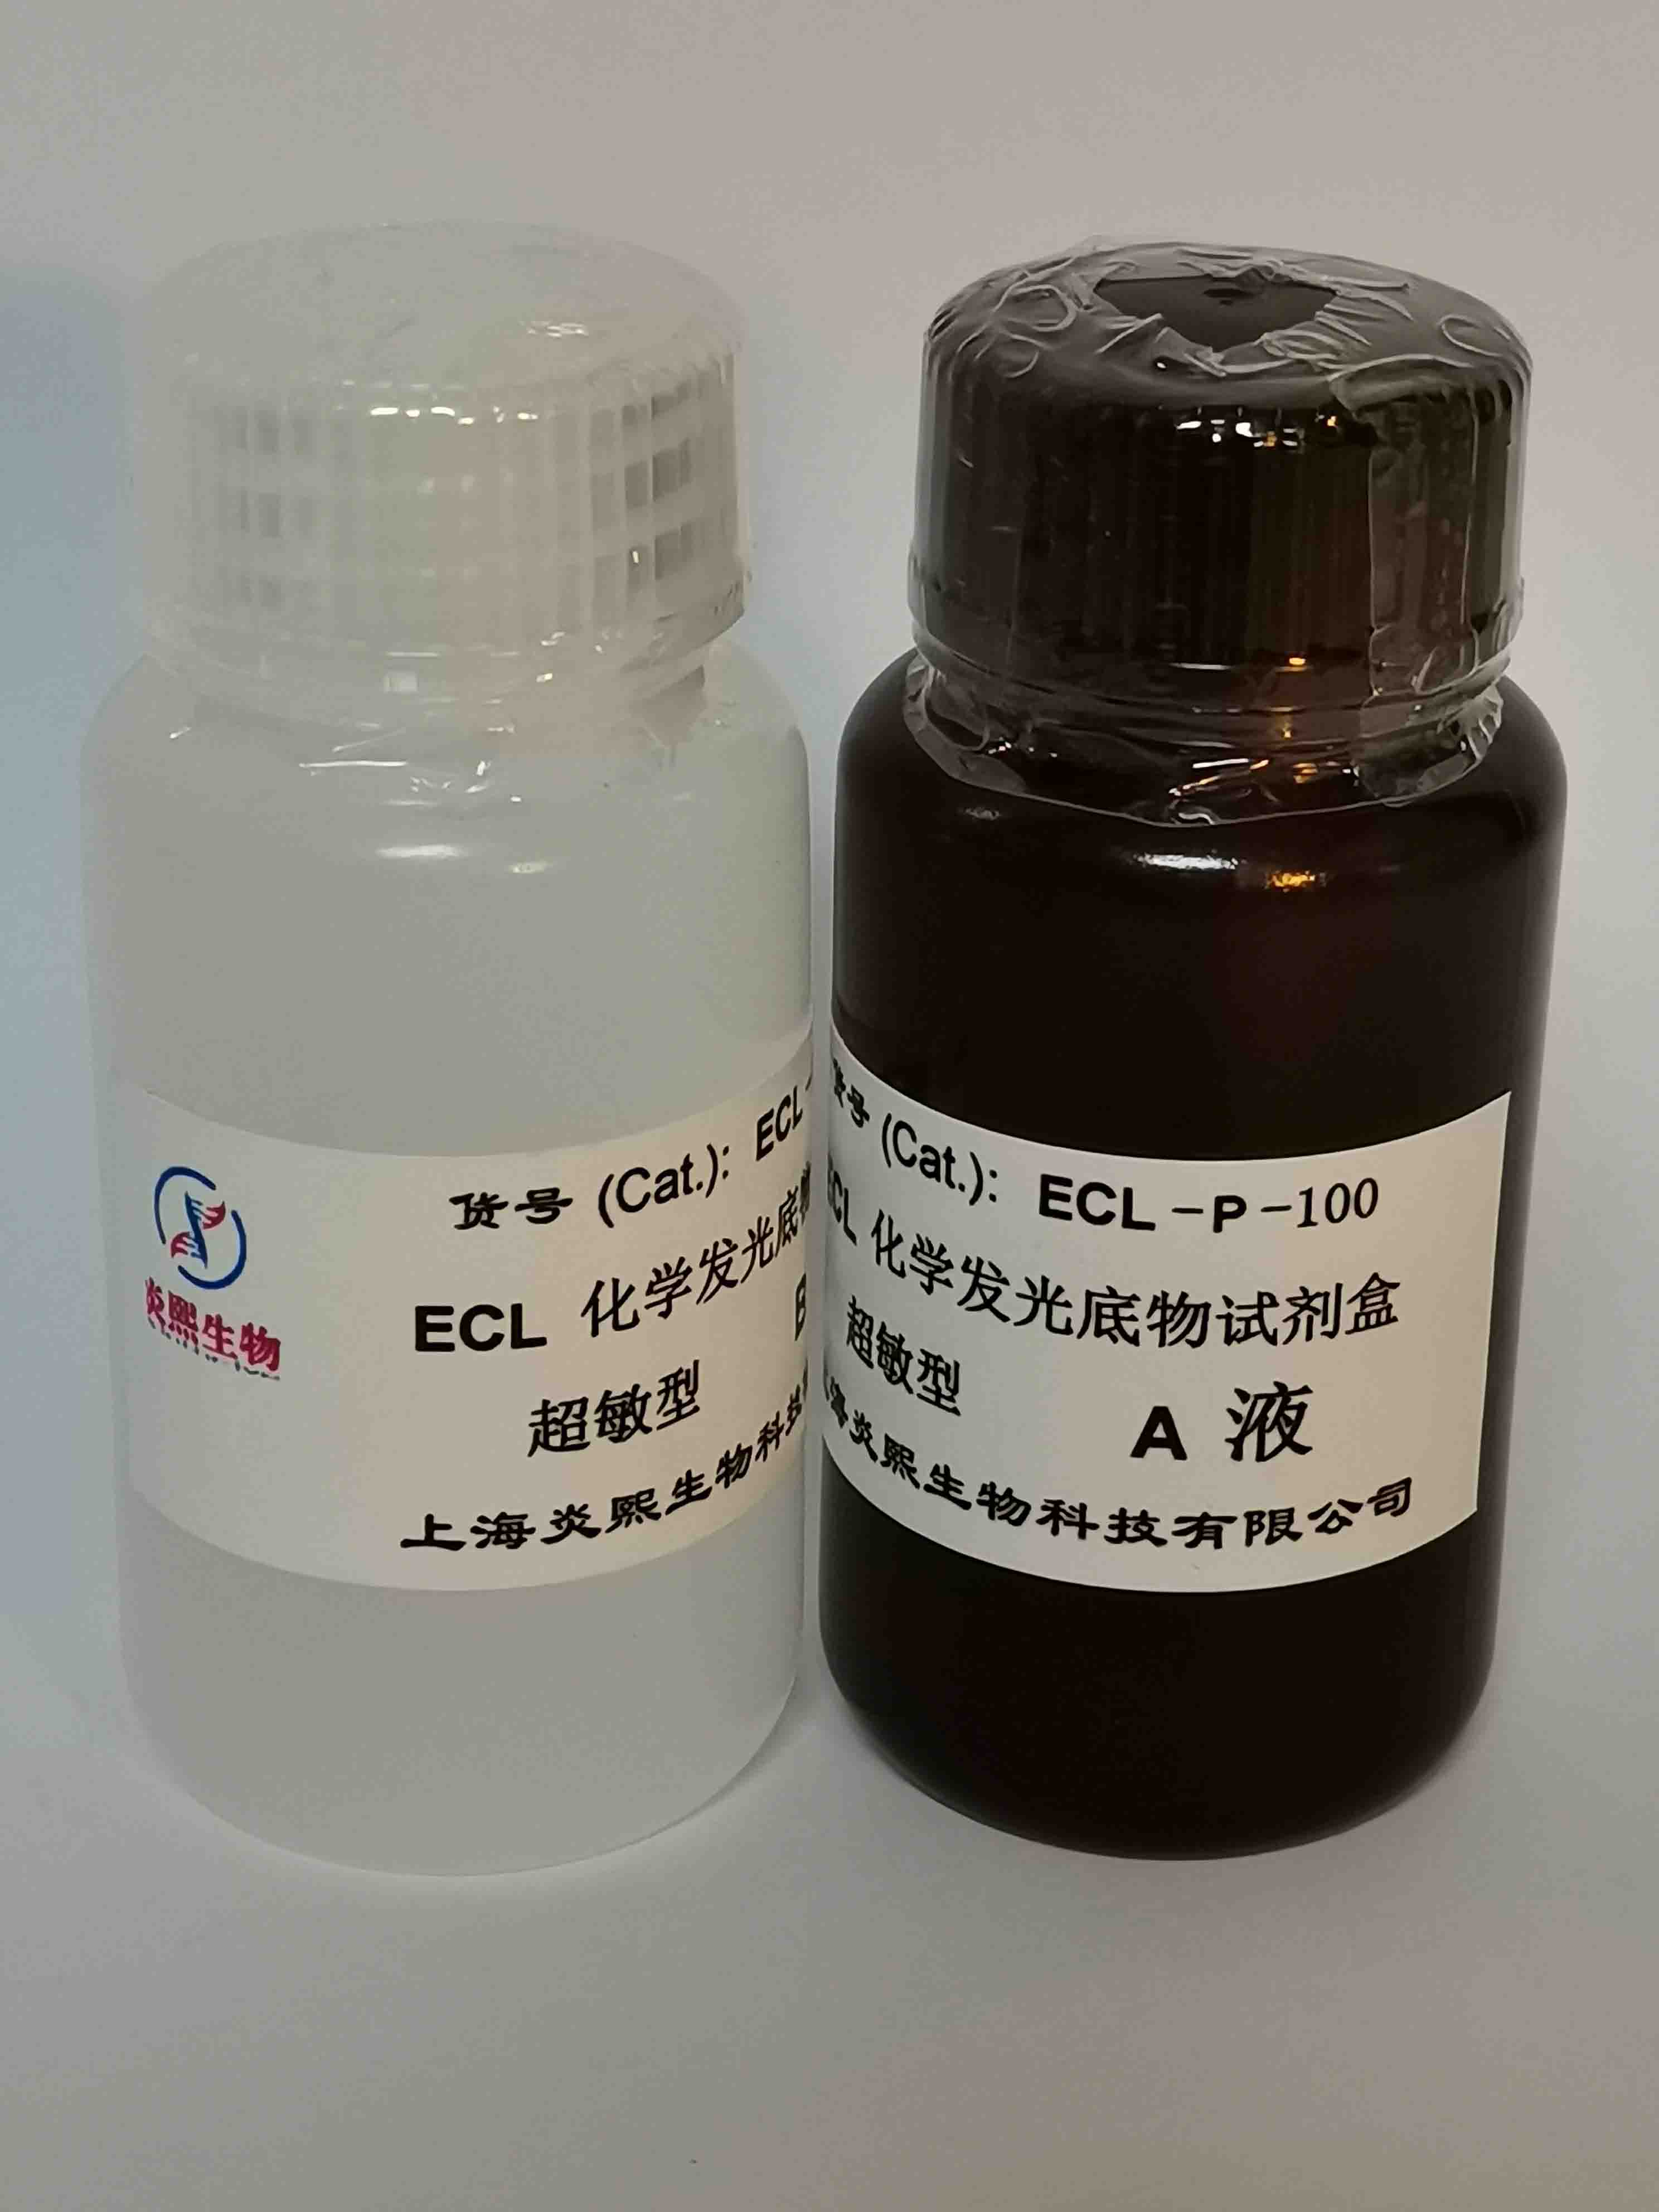 超敏型 ECL化学发光底物试剂盒,Super-sensitive Enhanced Chemiluminescence Substrate Kit